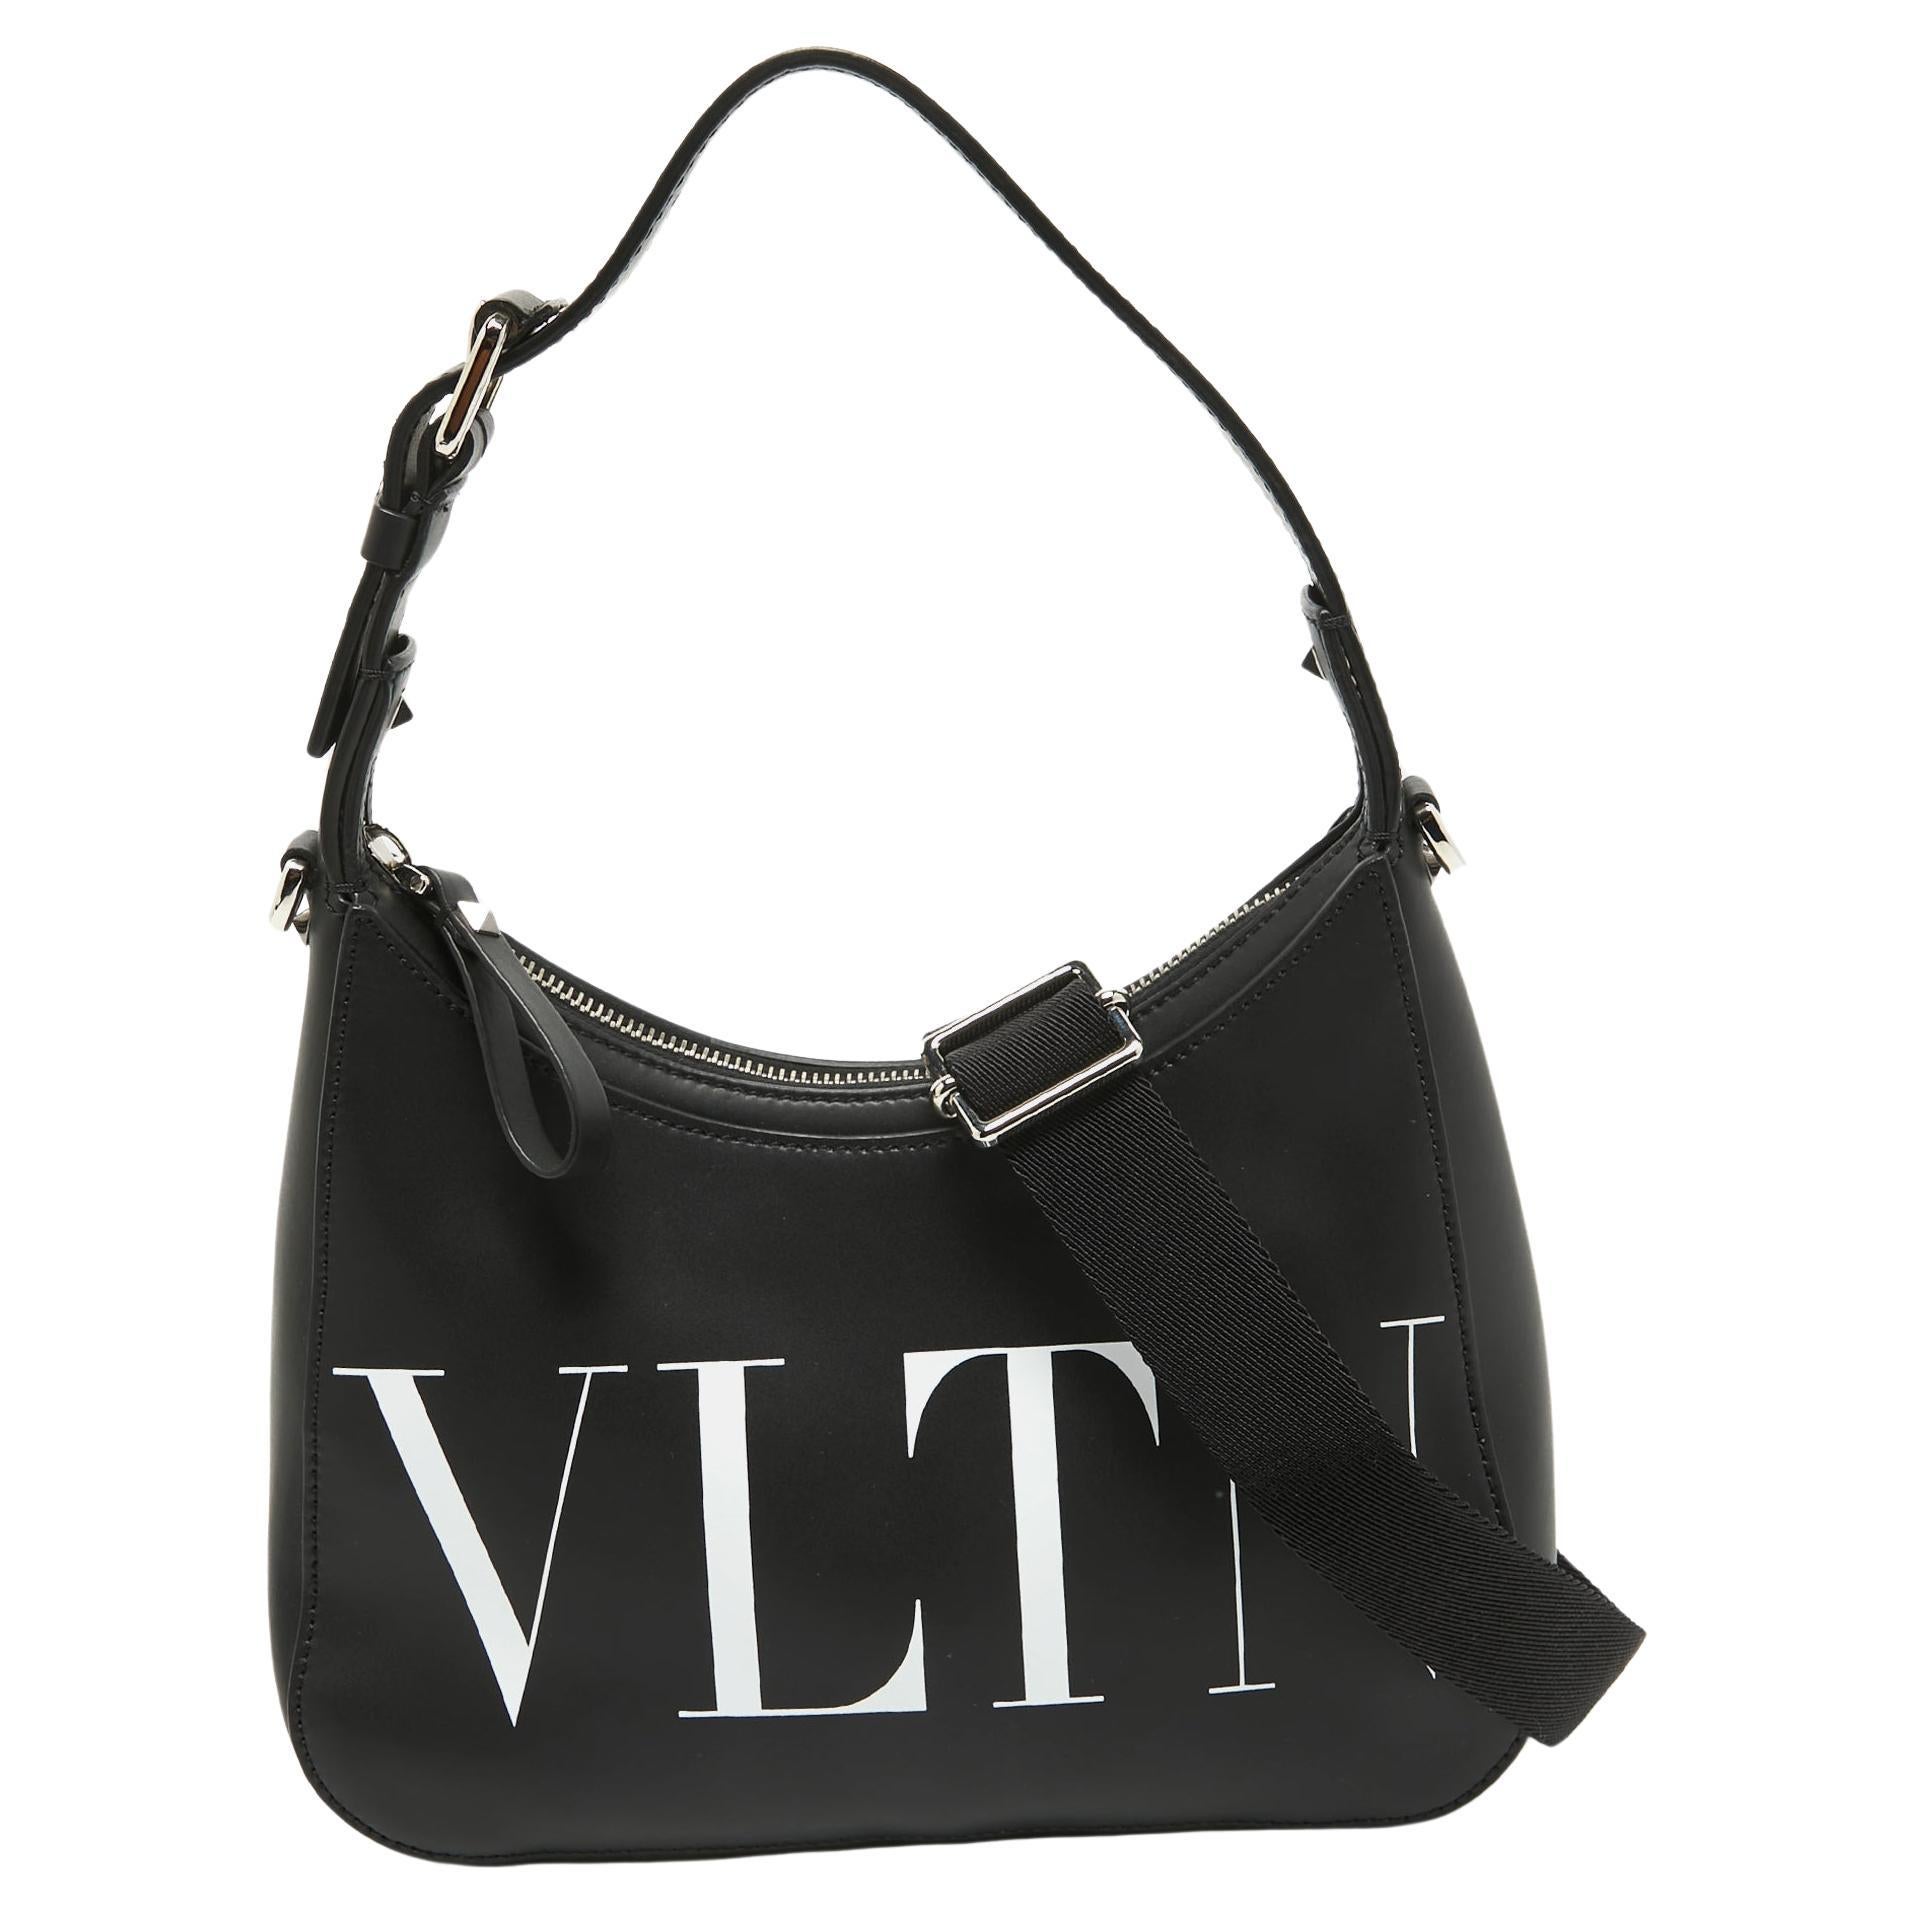 Valentino Black Leather Small VLTN Hobo For Sale